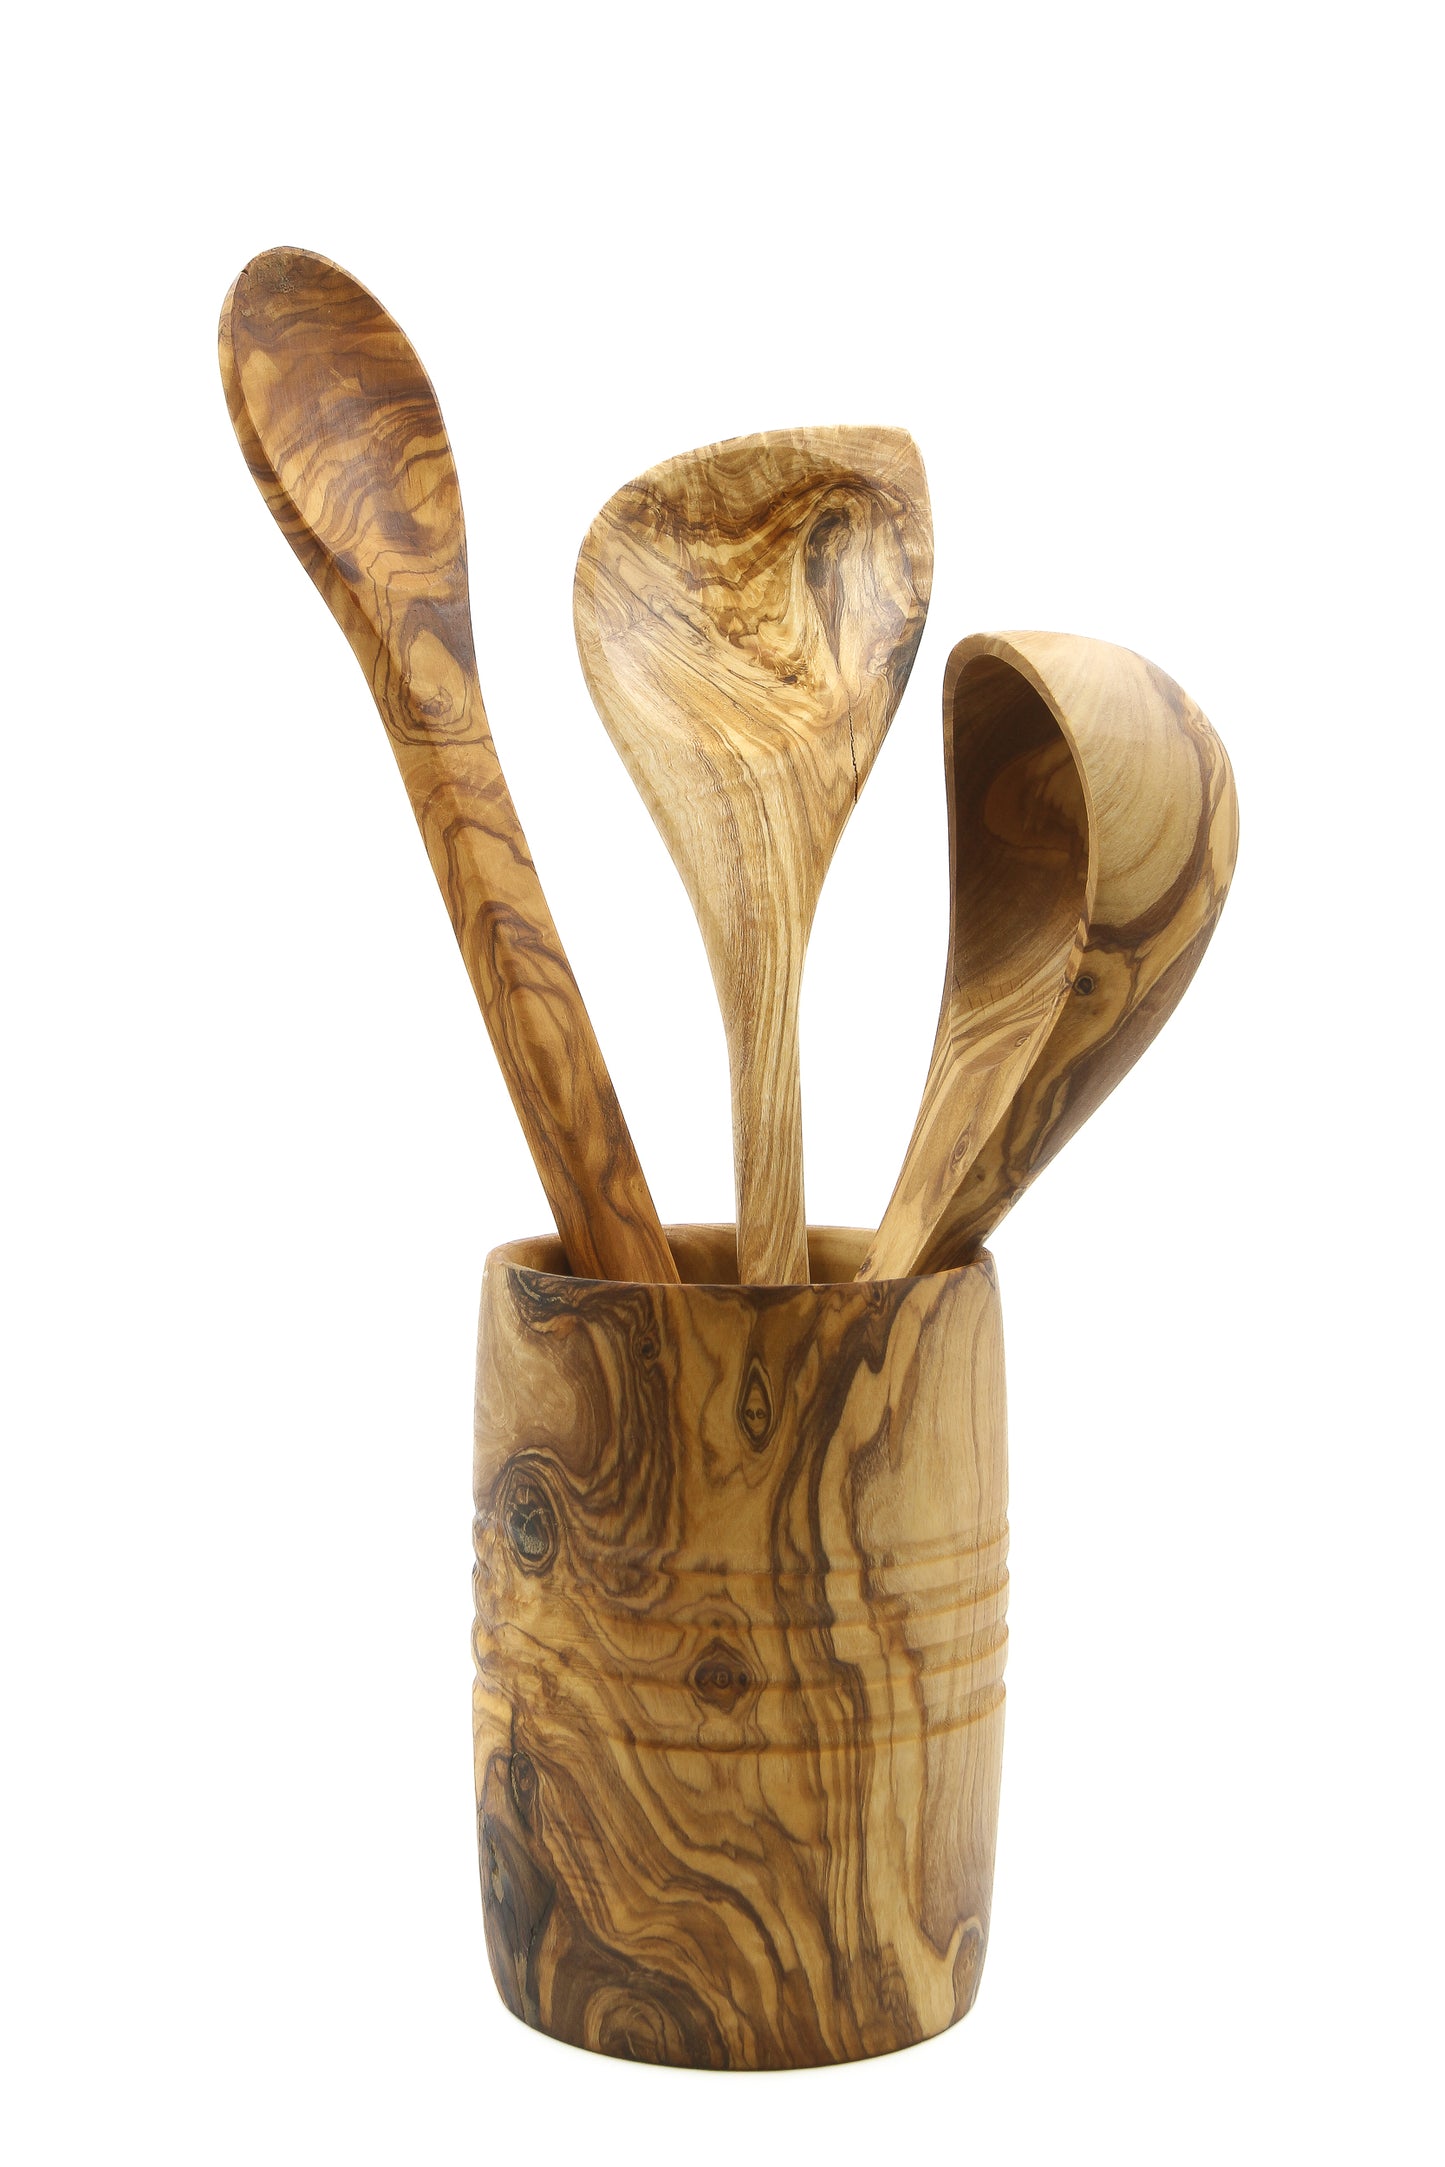 Olive wood kitchenware utensils set